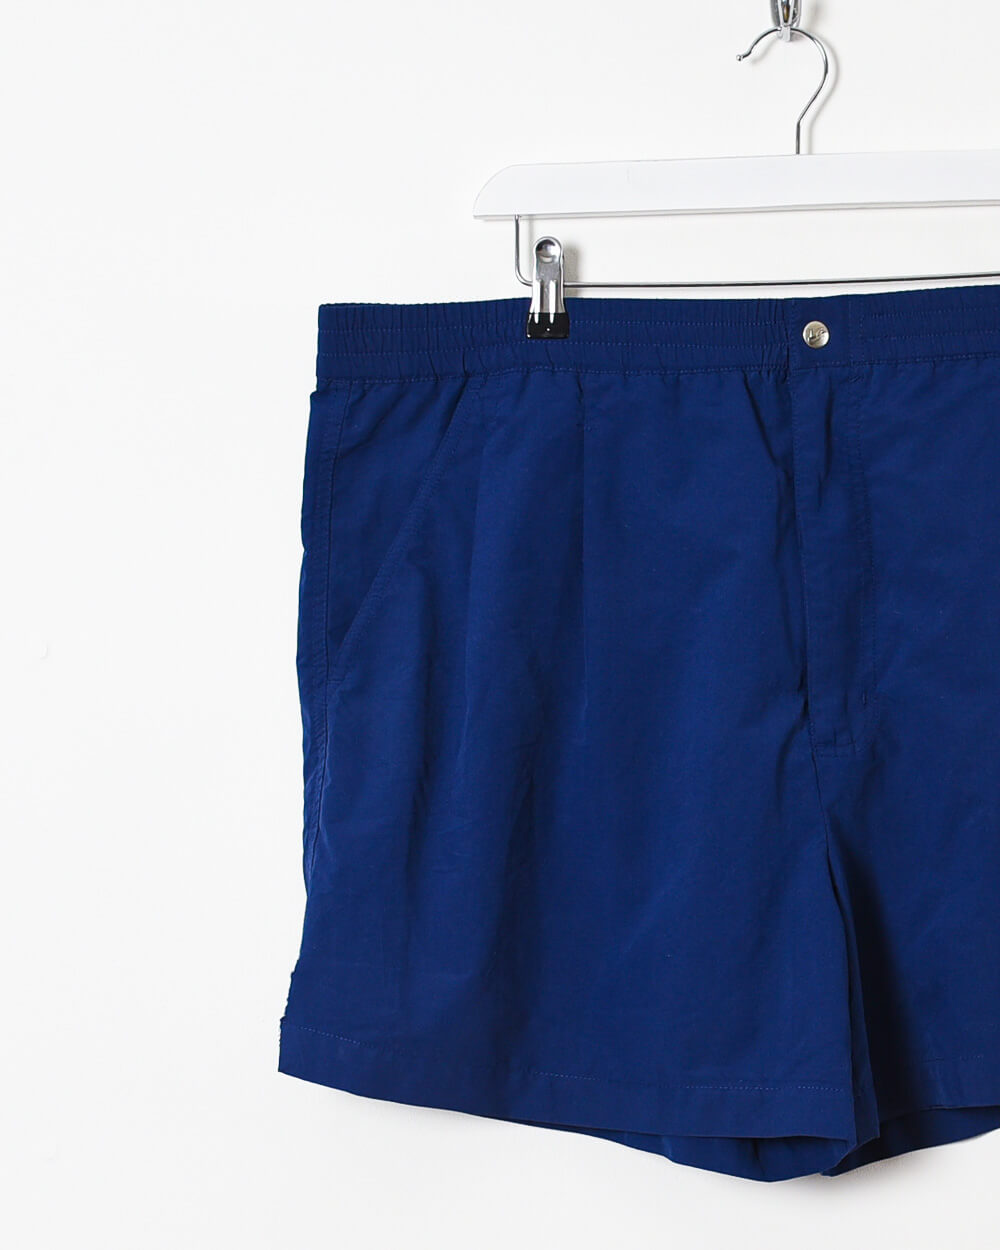 Blue Nike Shorts - W40